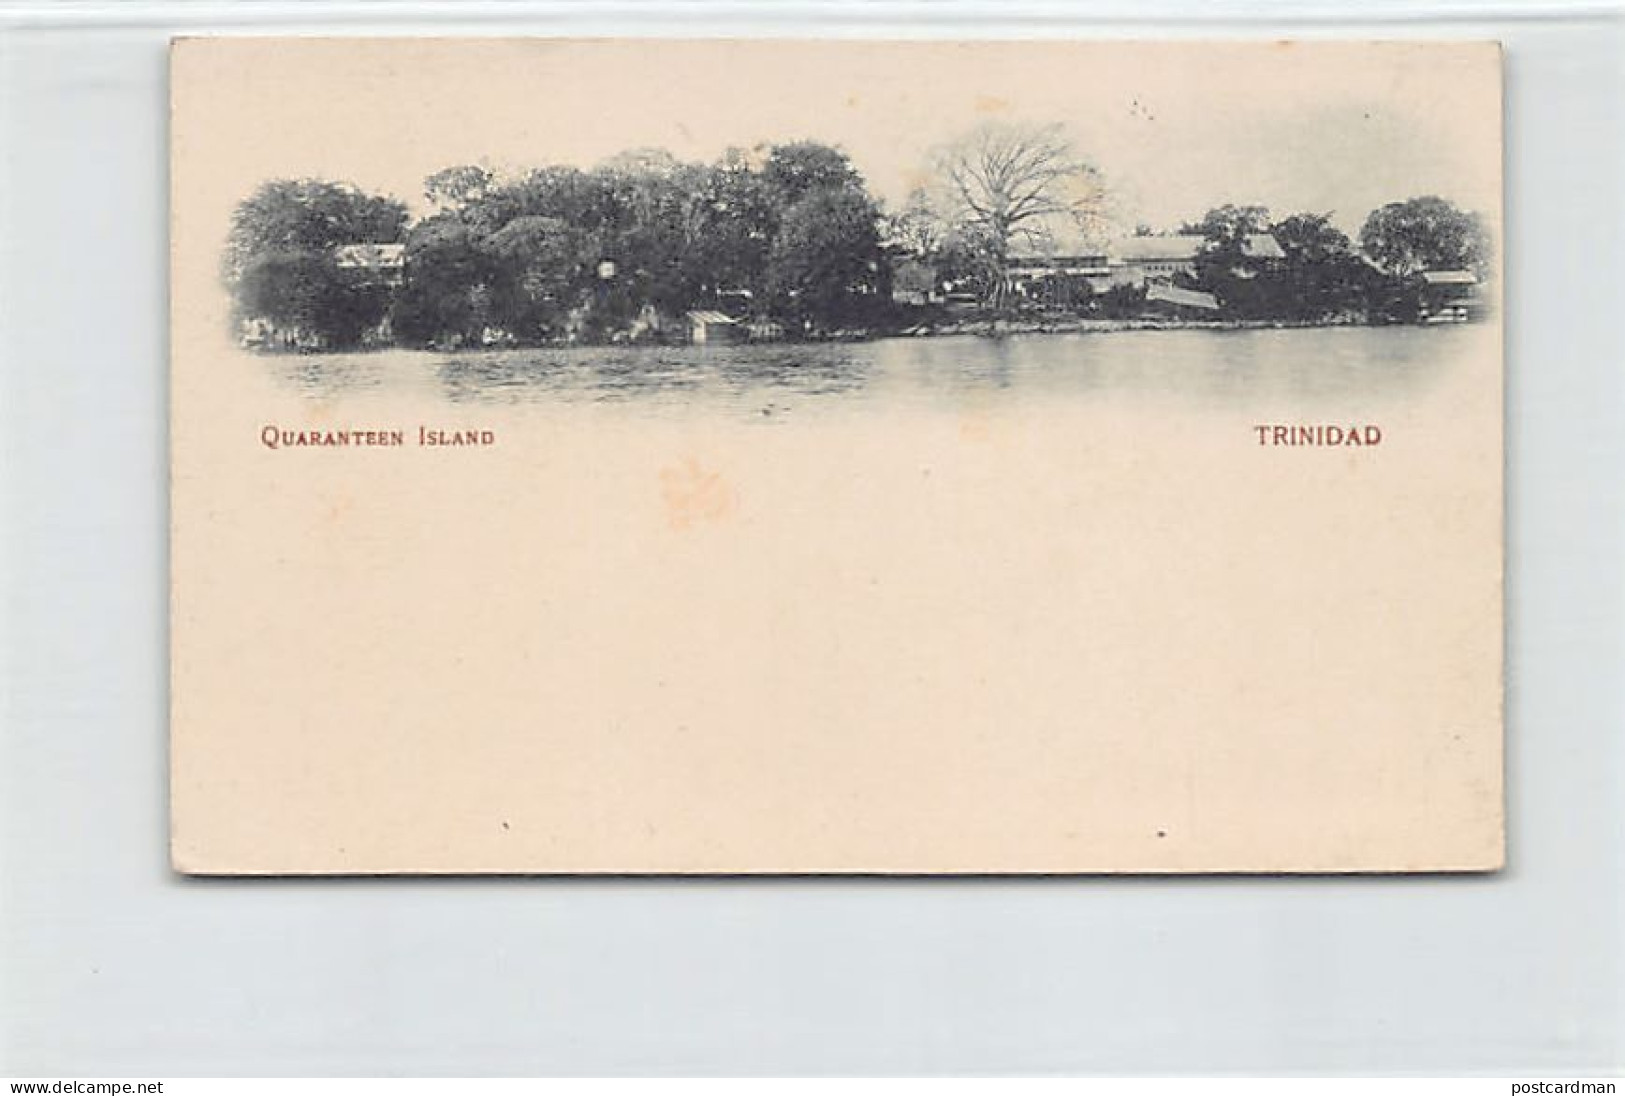 Trinidad - Quaranteen Island - SMALL SIZE Early Forerunner Postcard - Publ. Unknown  - Trinidad